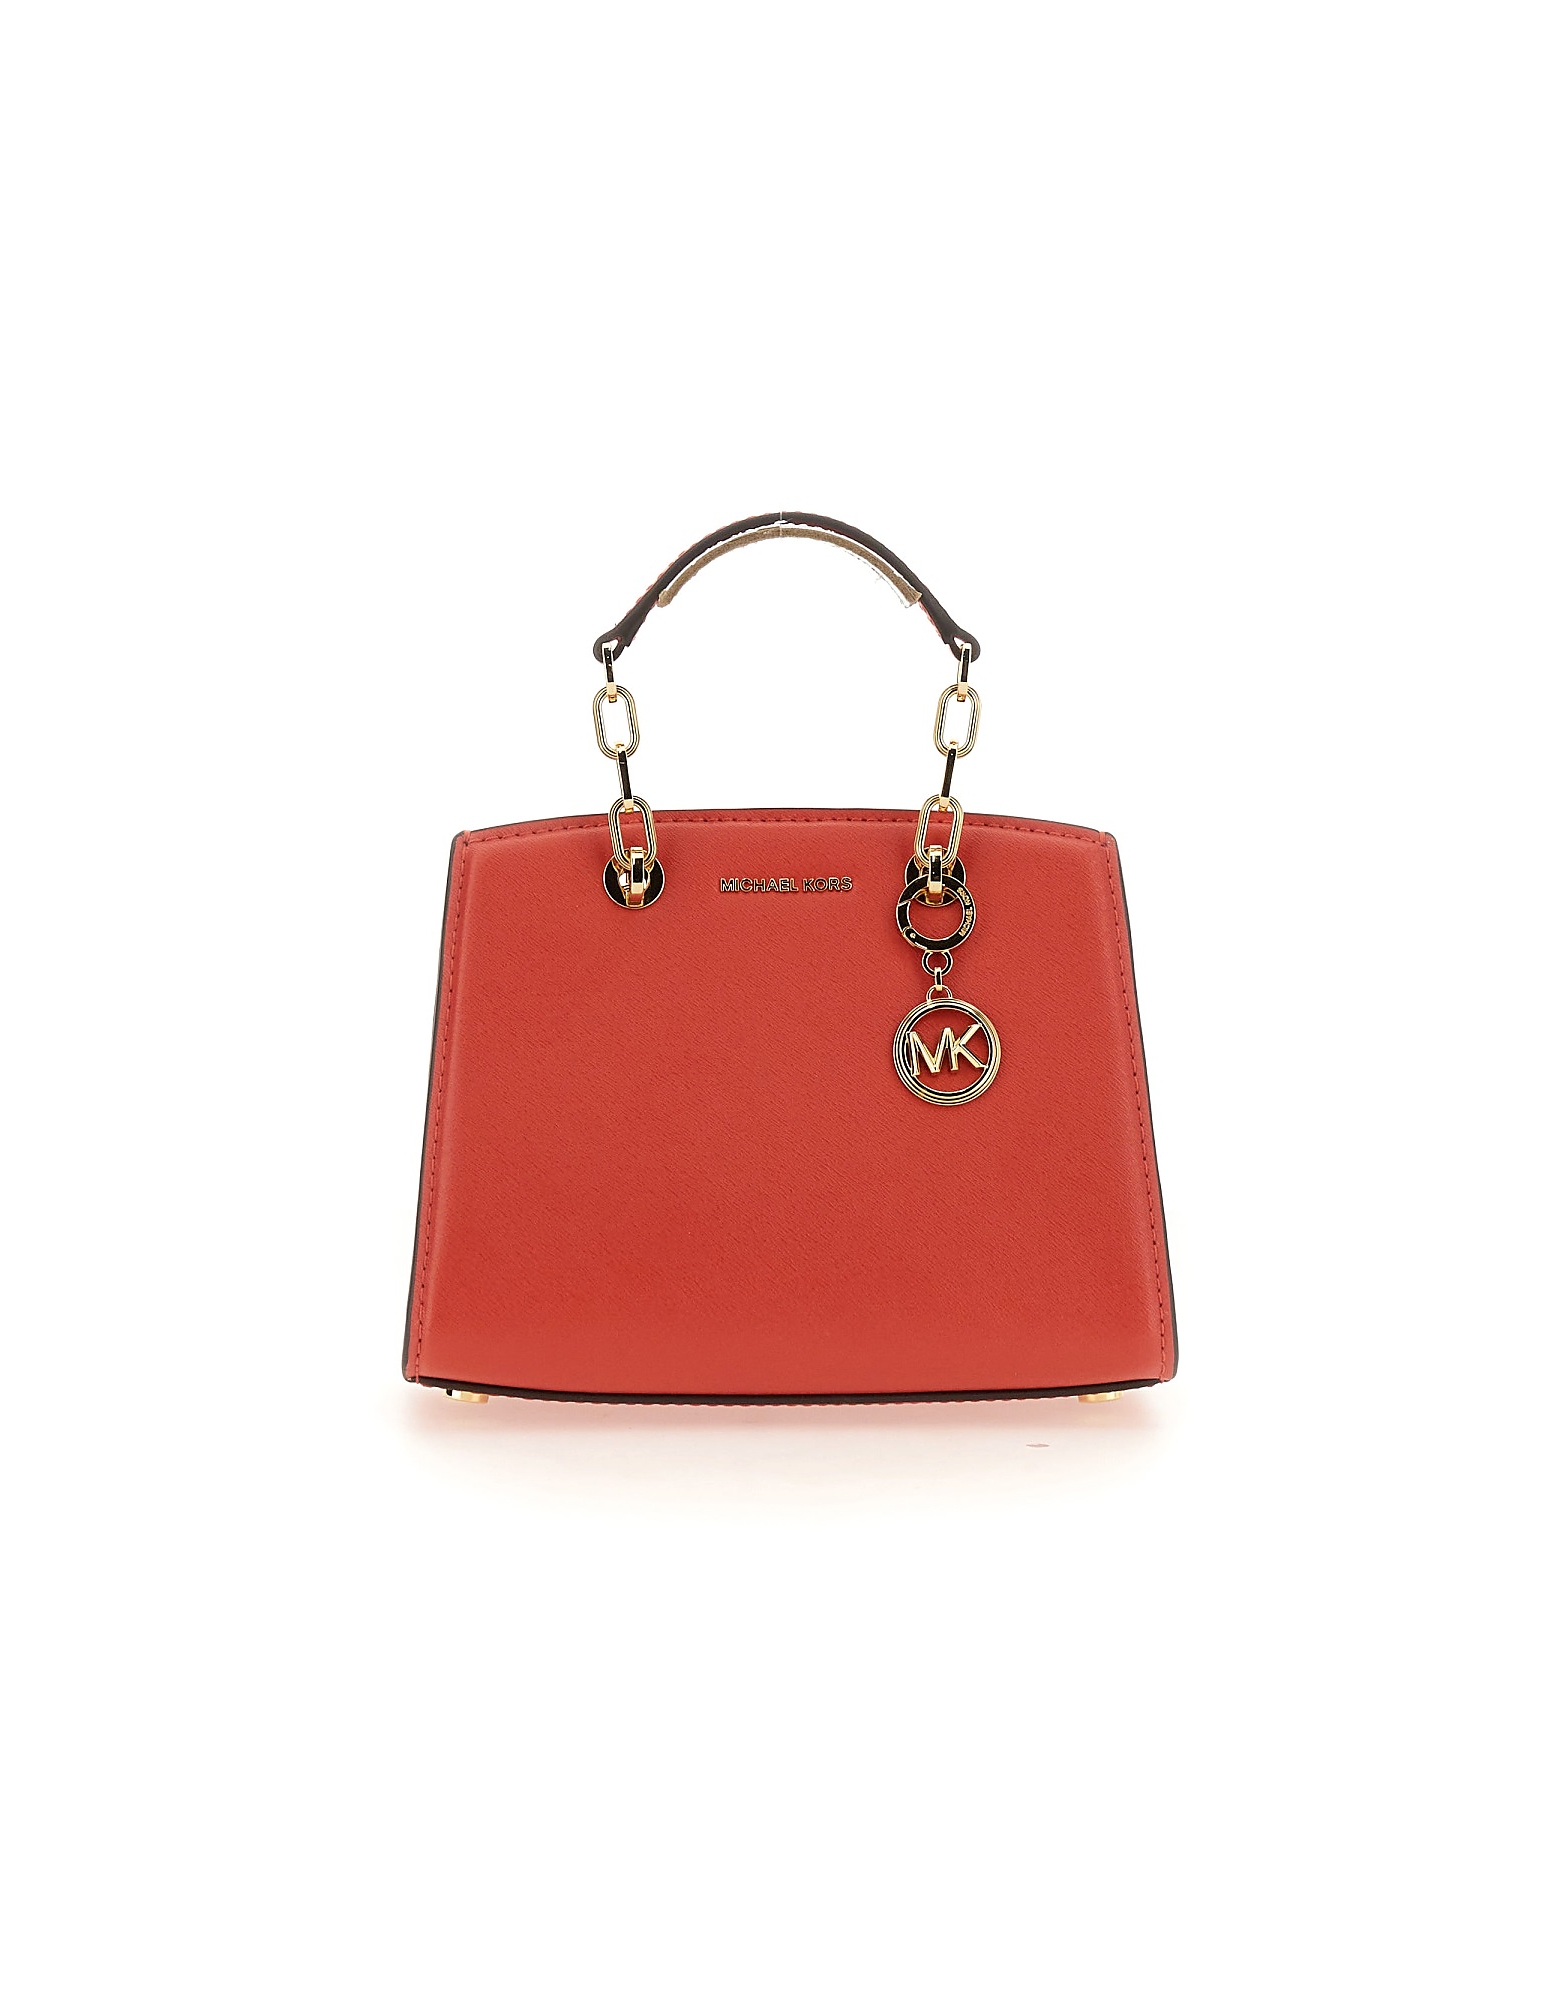 Michael Kors Designer Handbags In Red